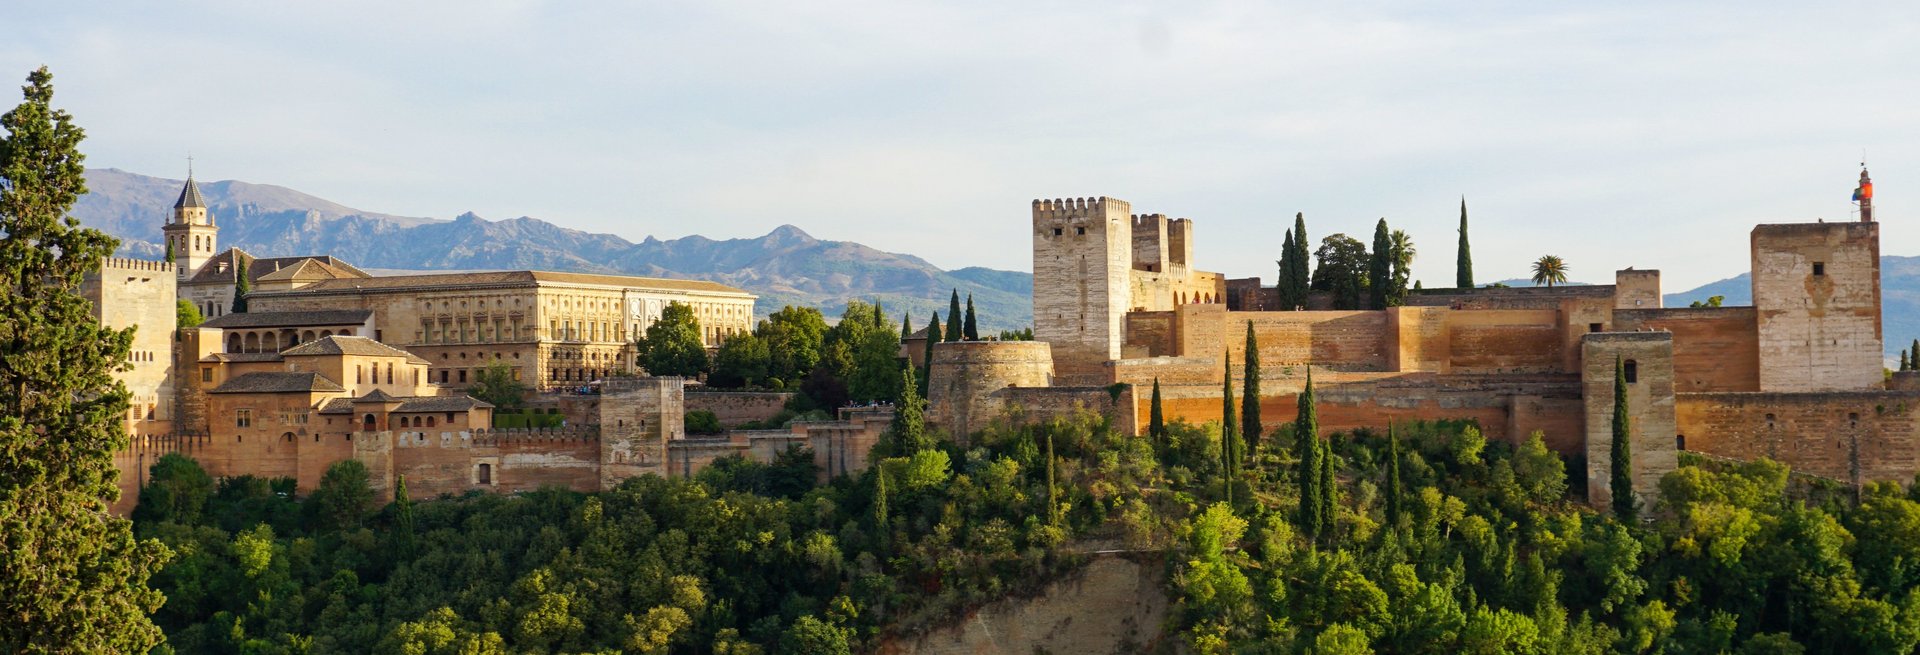 Der Alhambra Palast in Granada